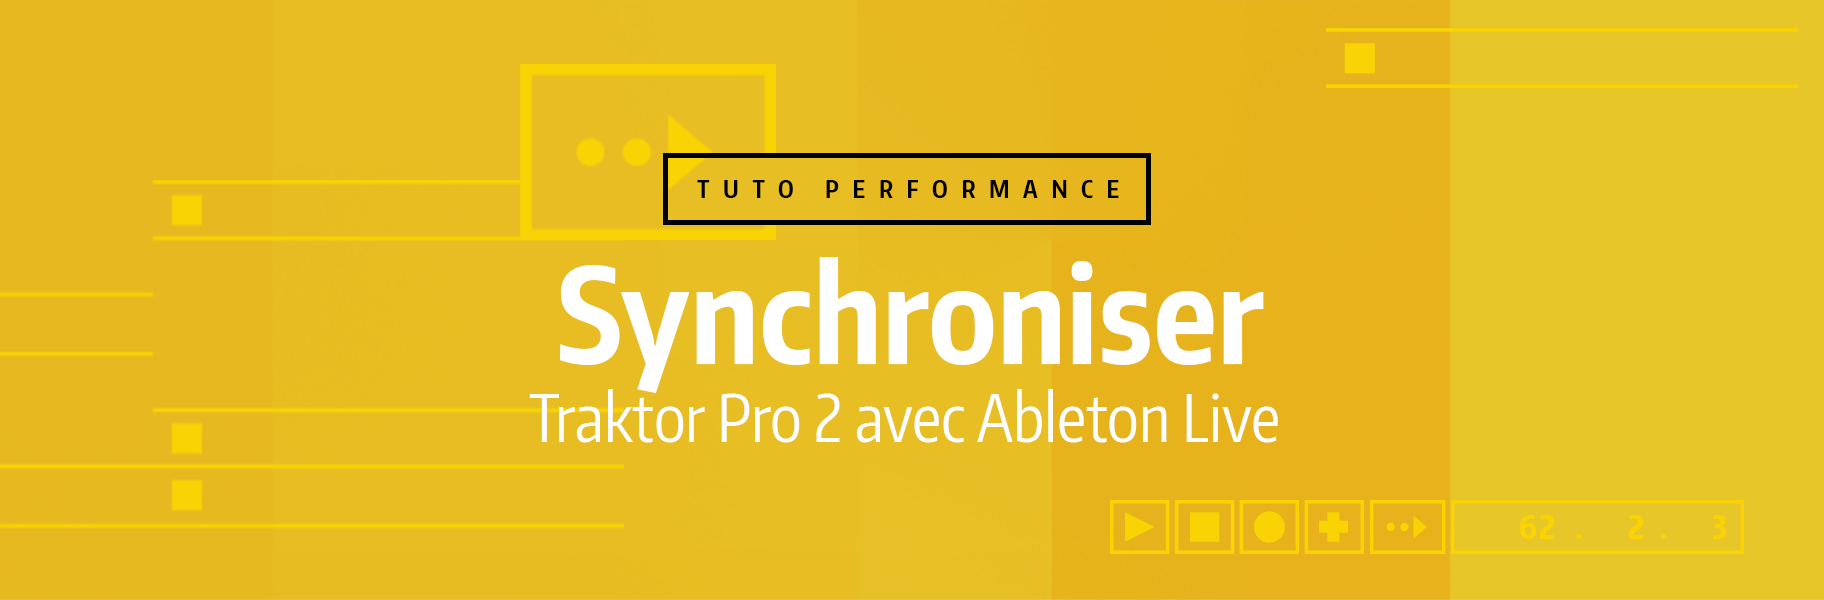 Tutoriel Ableton Live - Synchroniser Traktor Pro 2